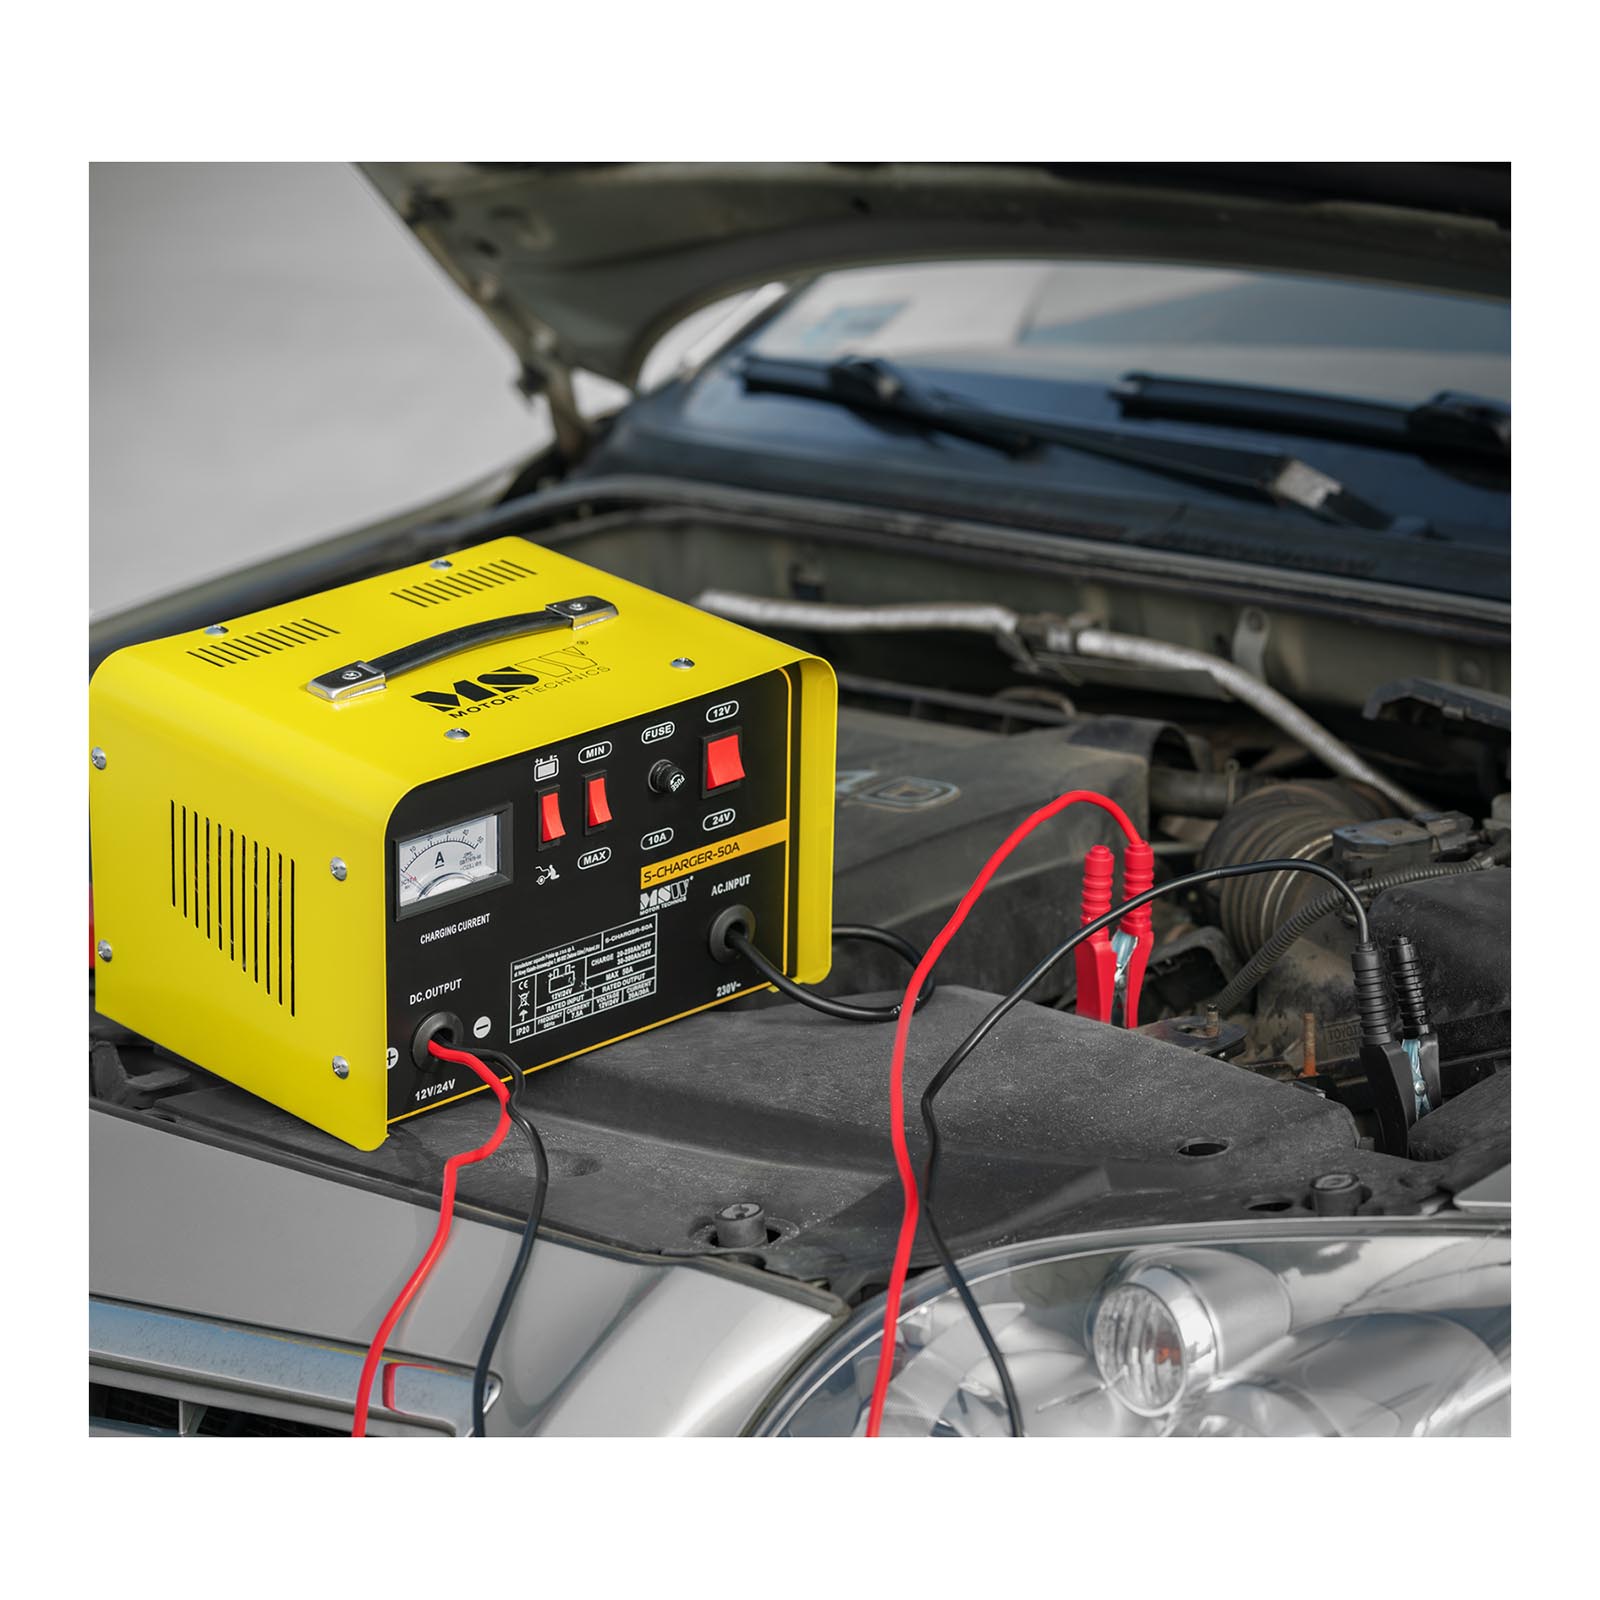 Arebos Autobatterie-Ladegerät, 12 V / 24 V, 50 A, mit Starthilfe